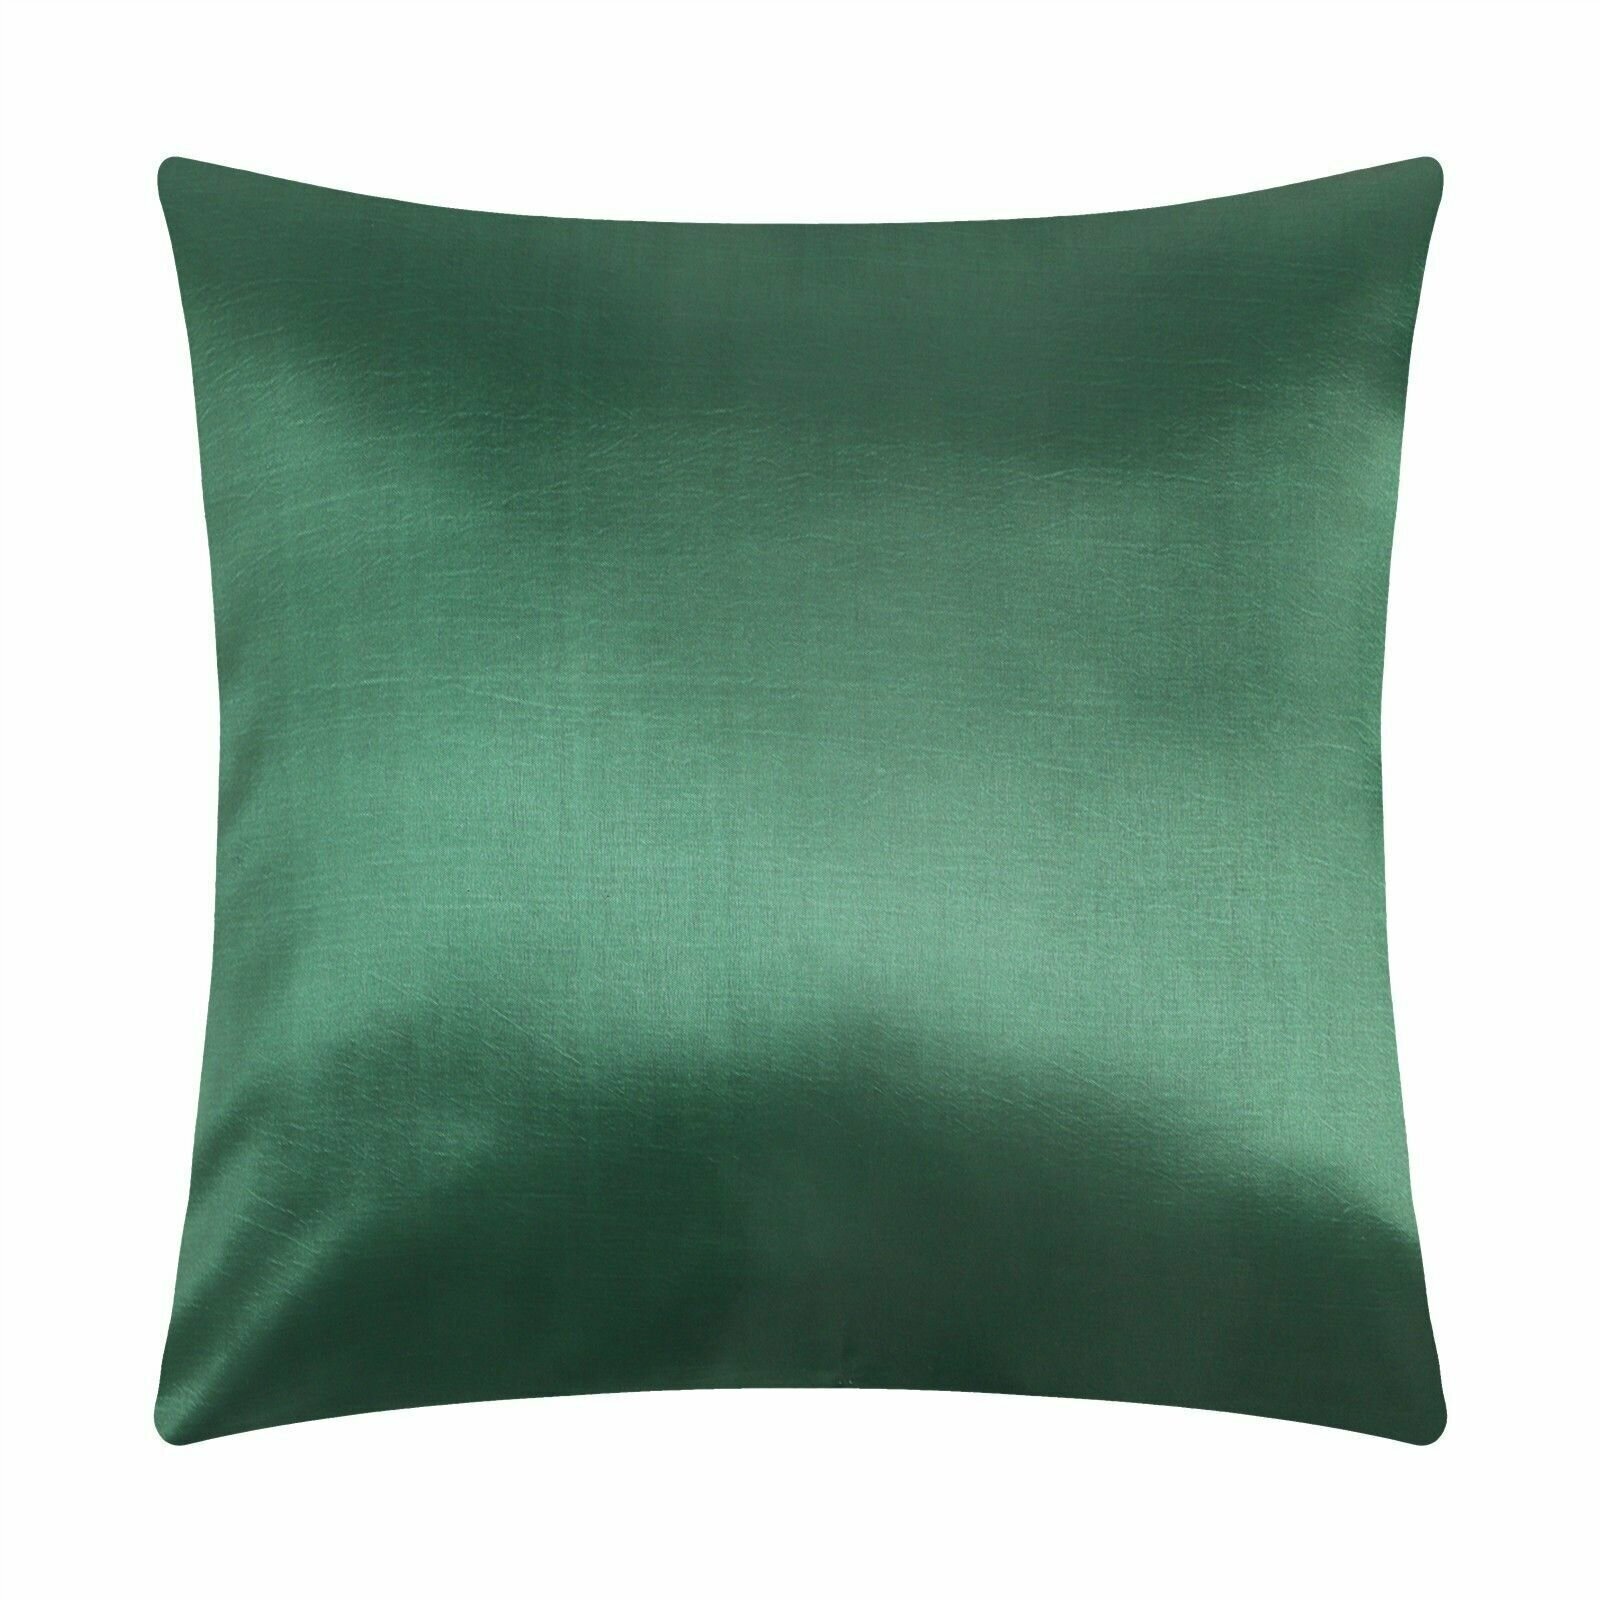 Чехол на подушку Экономь и Я цв. зеленый, 40 х 40 см, 100% п/э